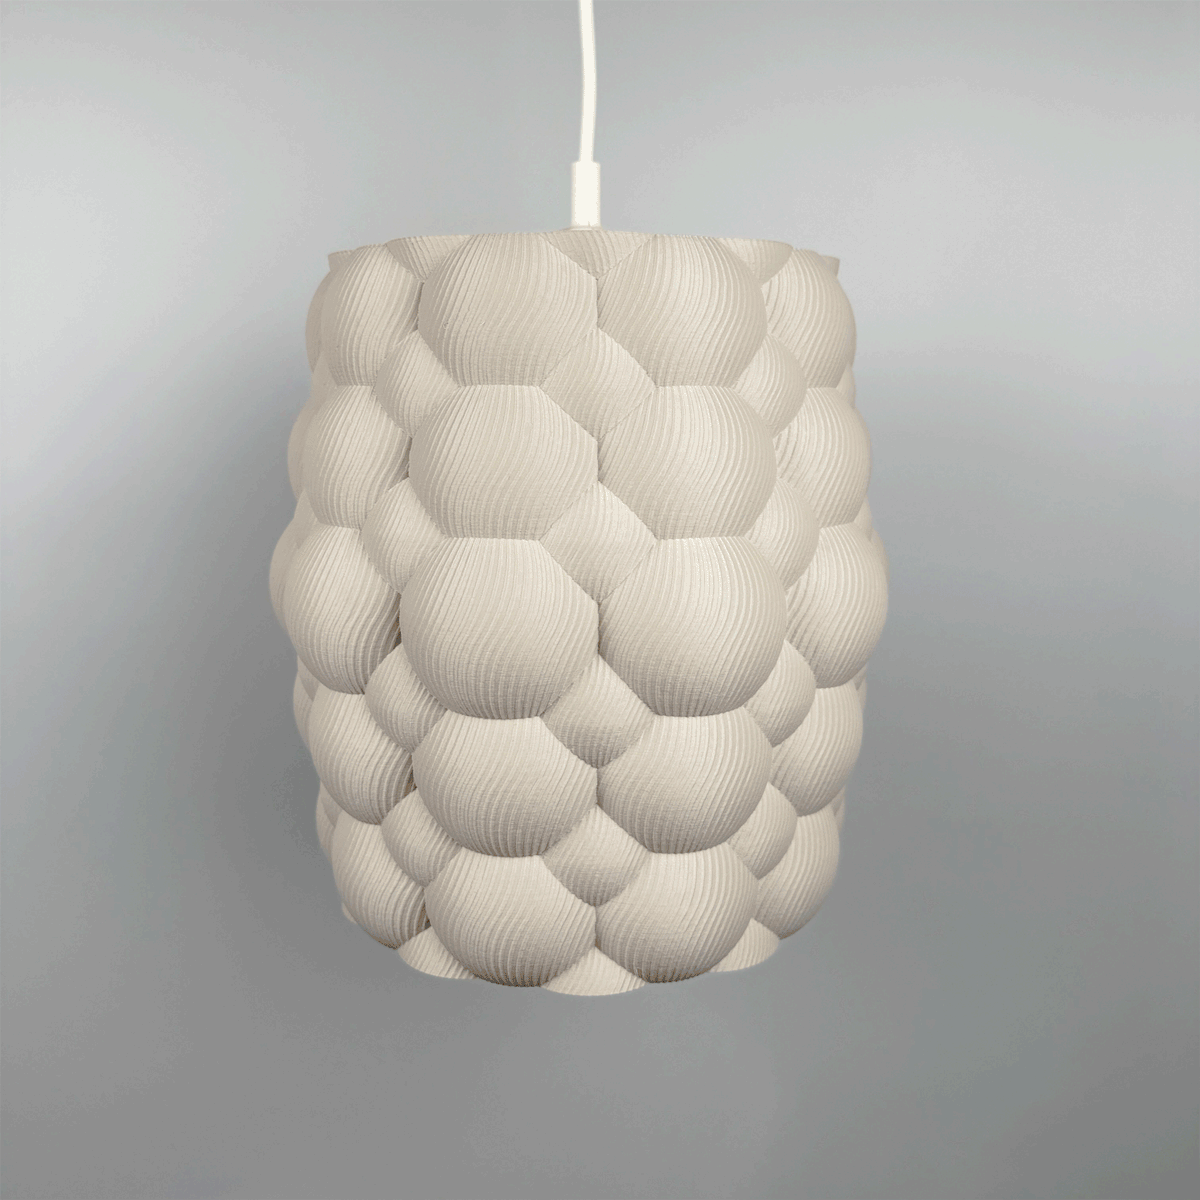 The Pop It Lampshade: Vibrant Modern Lighting